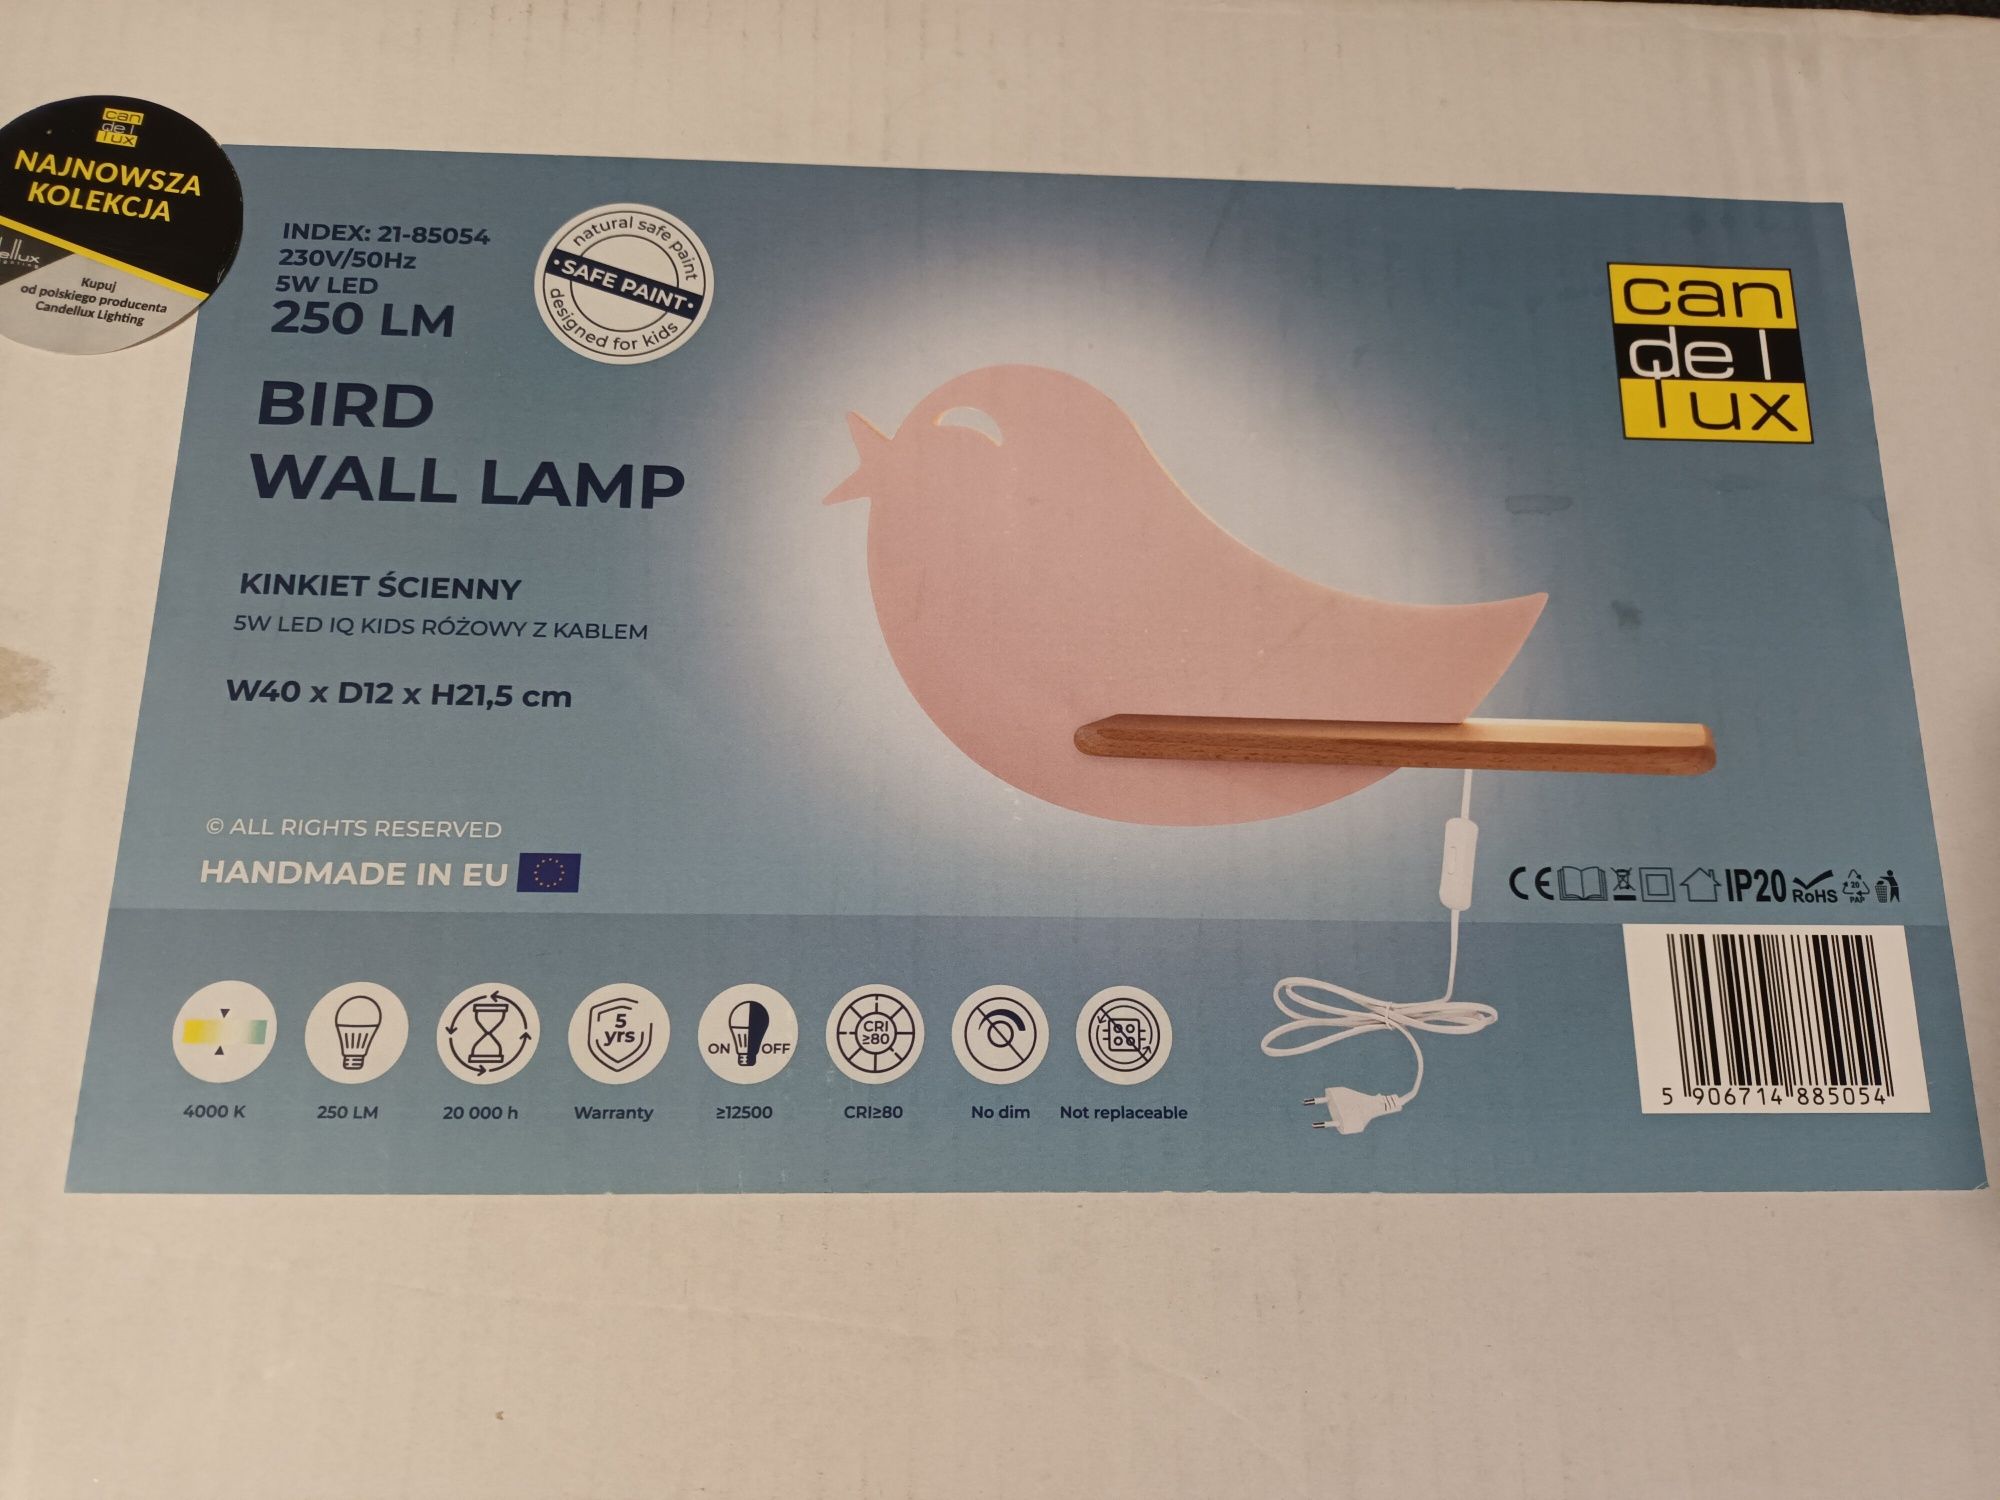 LAmpka półka ptaszek kinkiet  Bird wall lamp